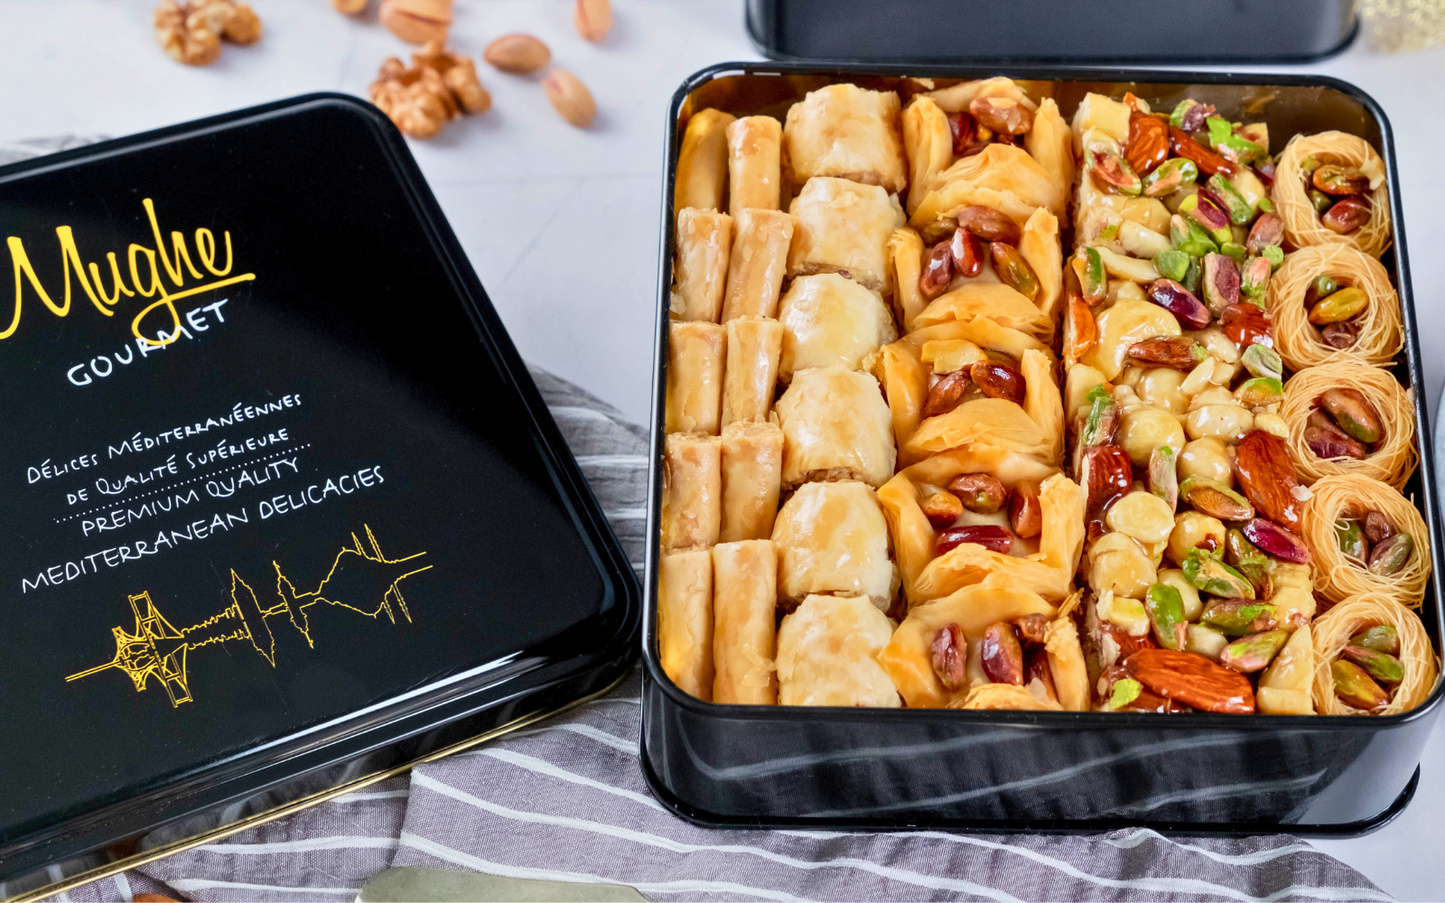 
                  
                    Mughe Luxury Baklava Assortment 750g - 26,5 Oz - Turkish Baklawa Bakery Dessert - Two Layers of Exquisite Sweets Gift Box
                  
                